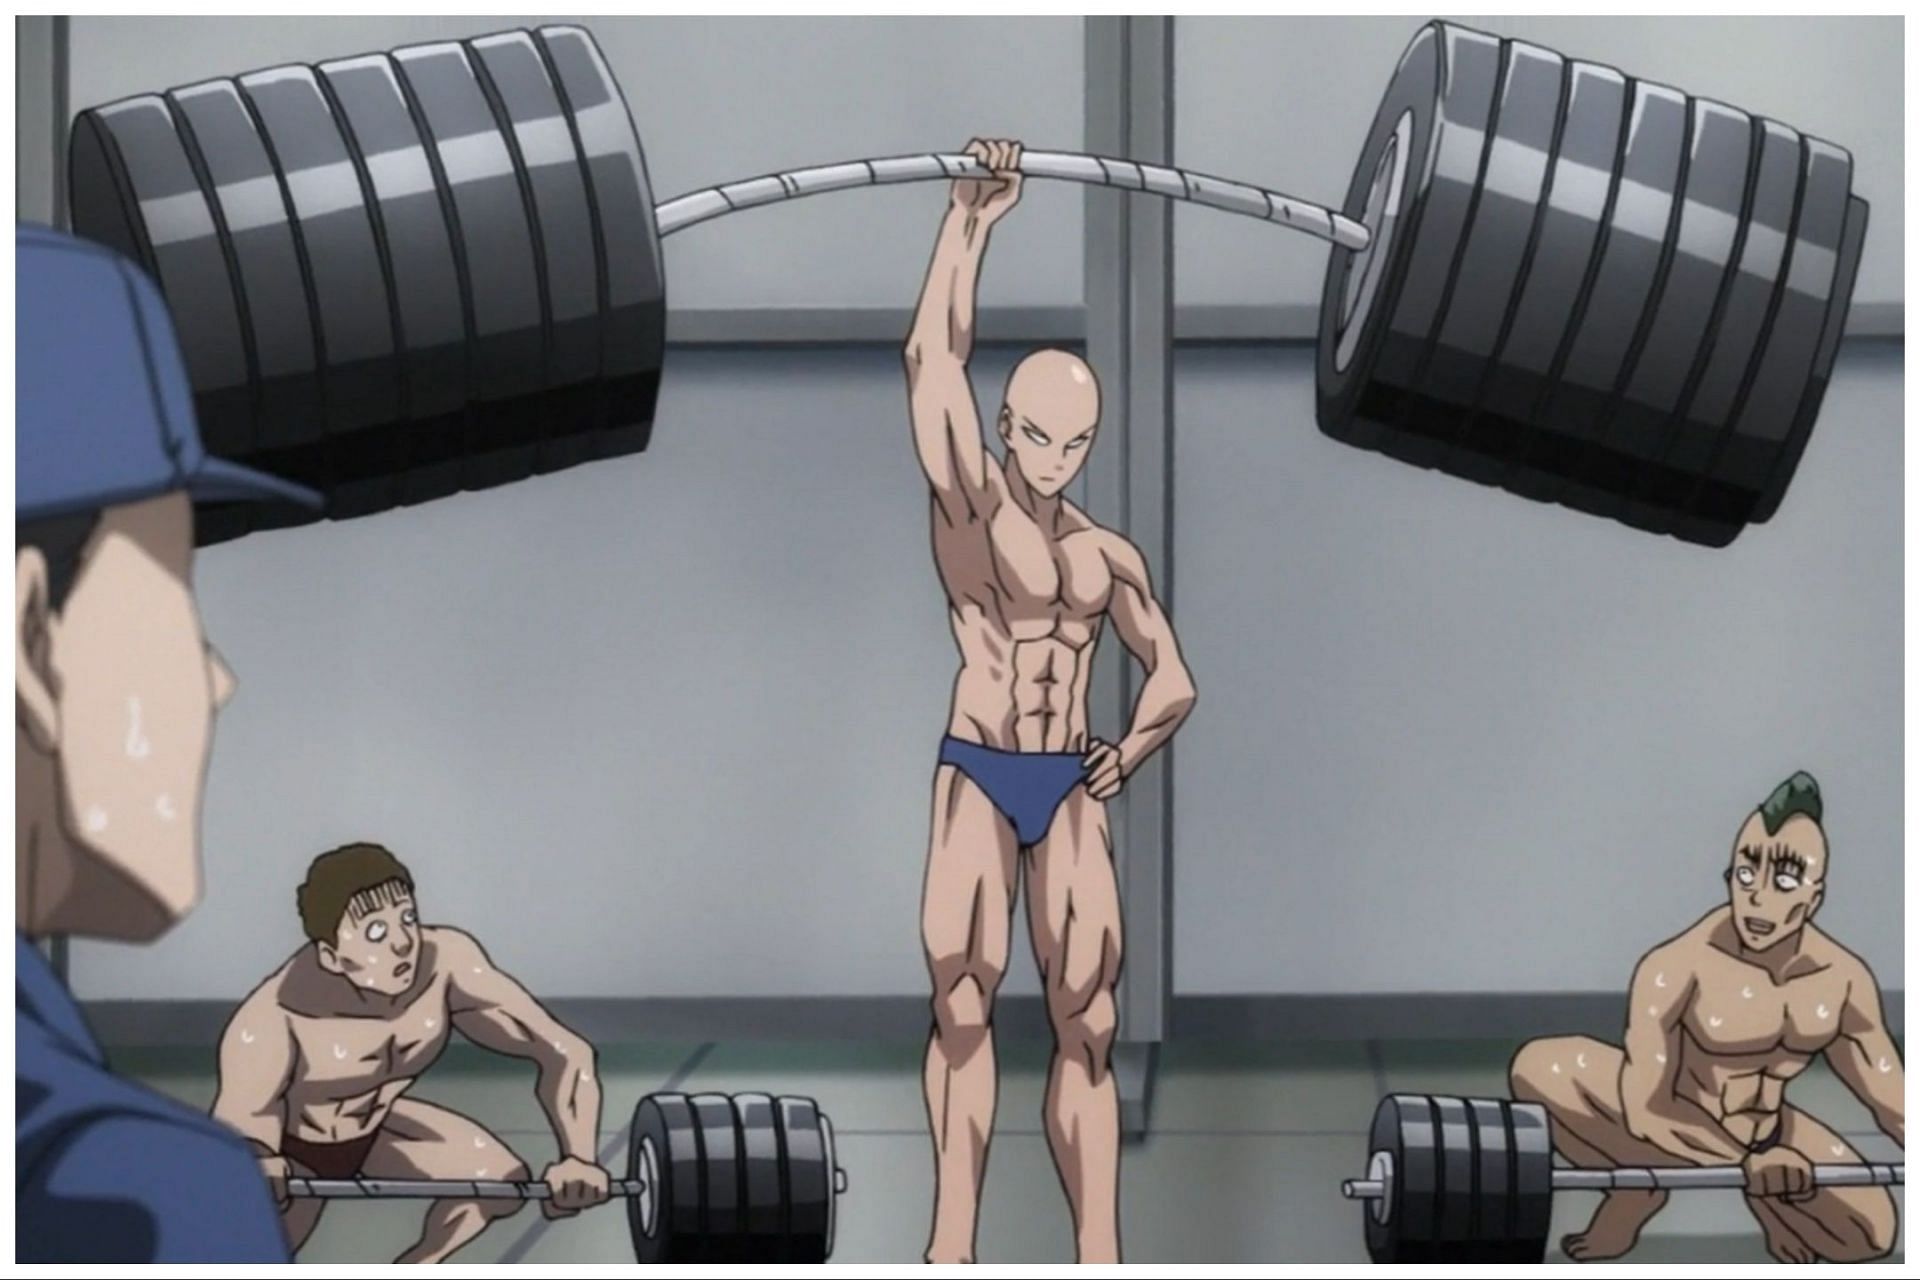 One Punch Man Workout Results - Saitama lifting weights (Image via Madhouse Studio)